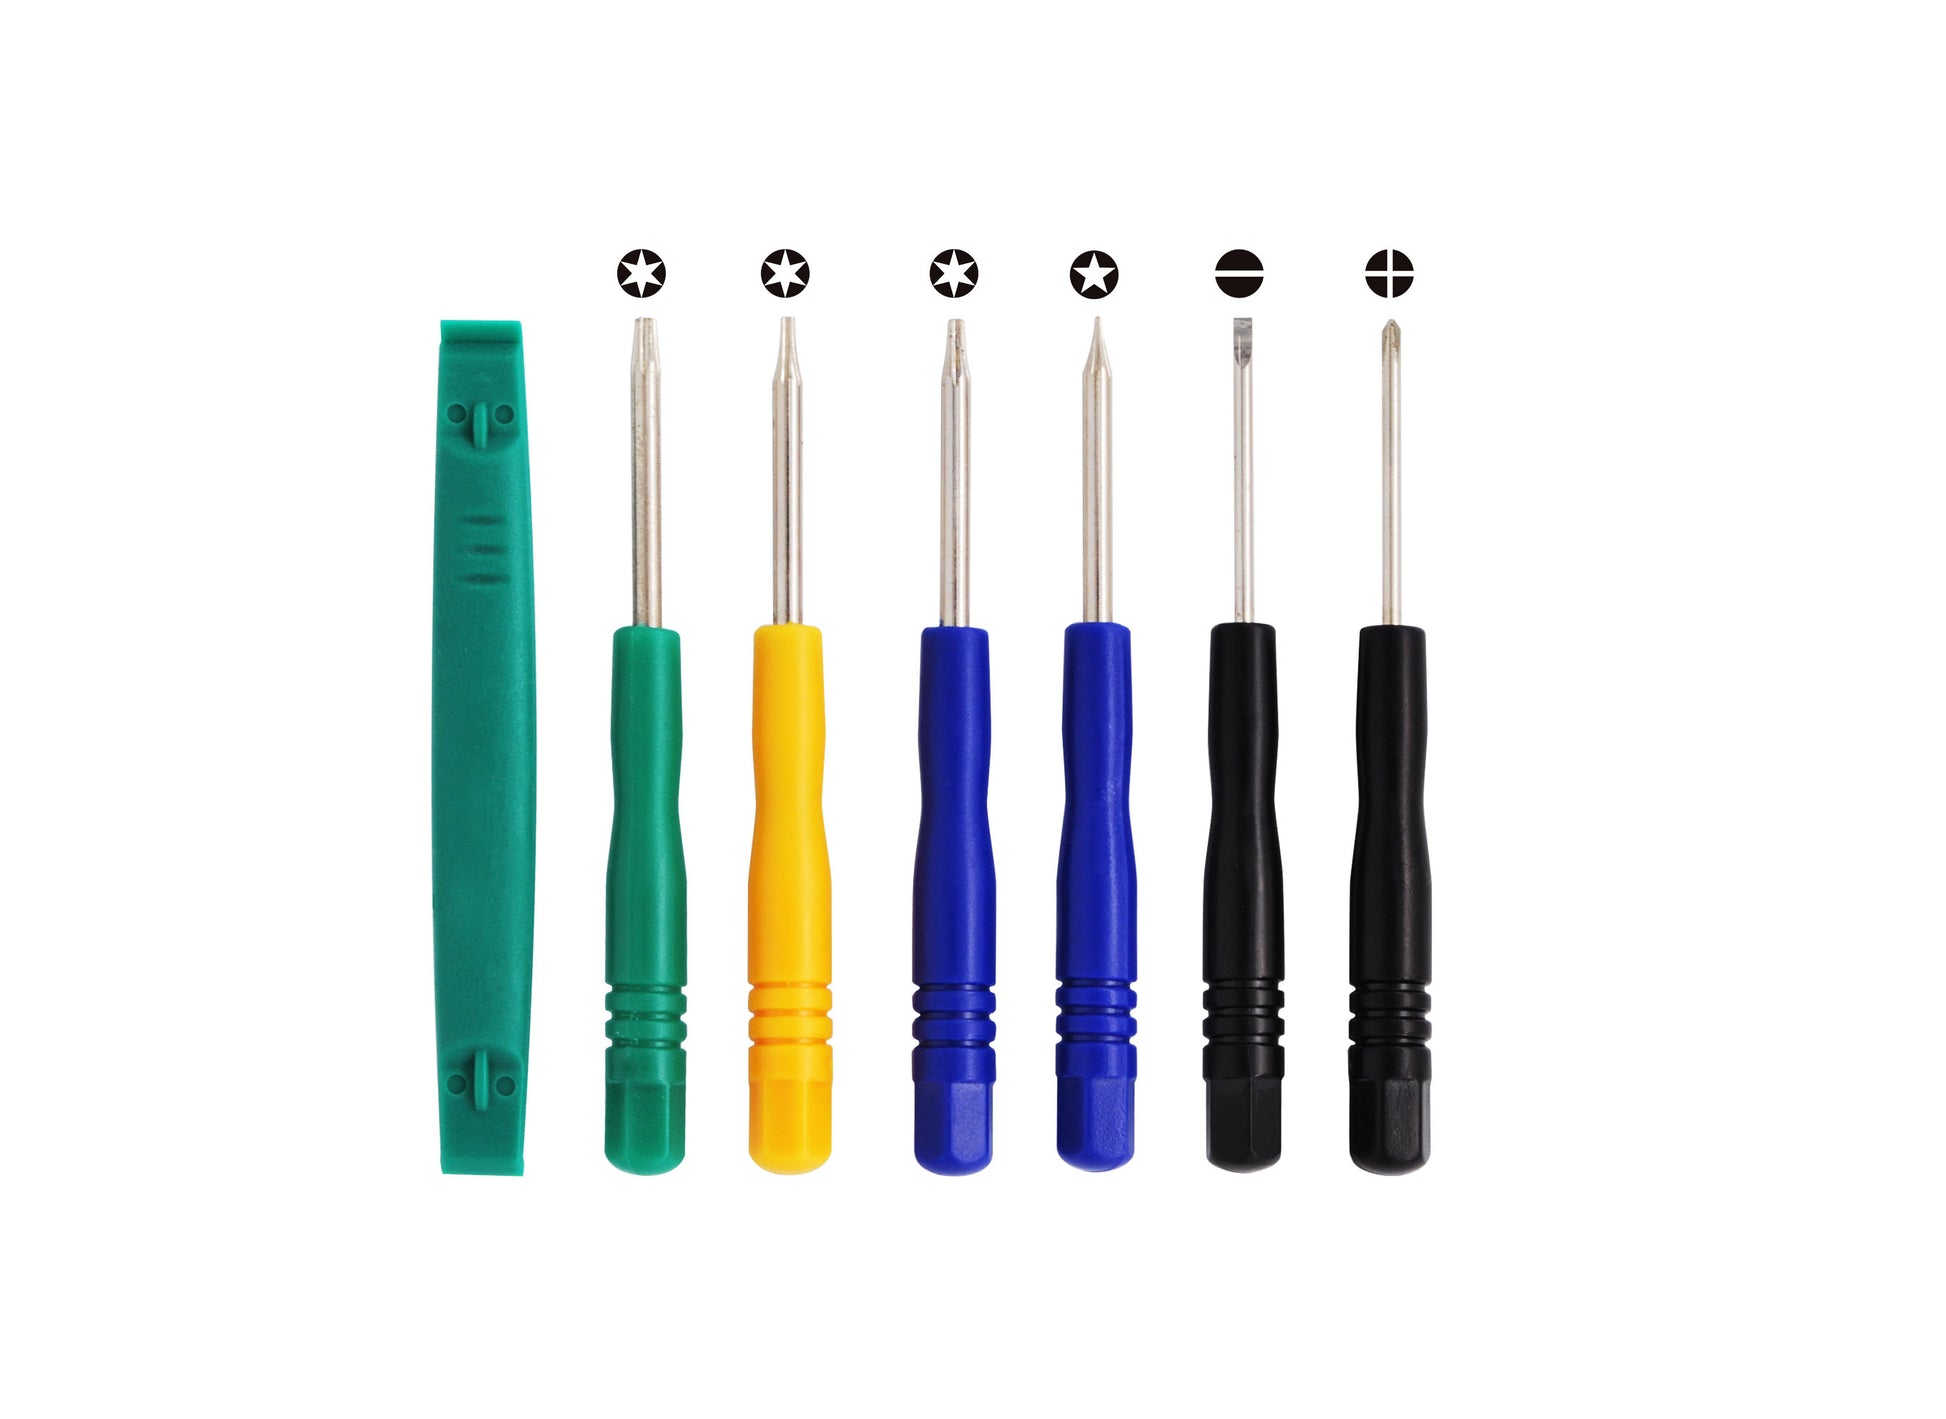 7 Tools (T8, T6, T5, T-, T+, Plastic & Pentalobe) Repair Kit Opening Tools For iPhone, iPad, GPS, Kindle, Nook, iPod, Watch Repair, Battery Replacement-SMAVtronics